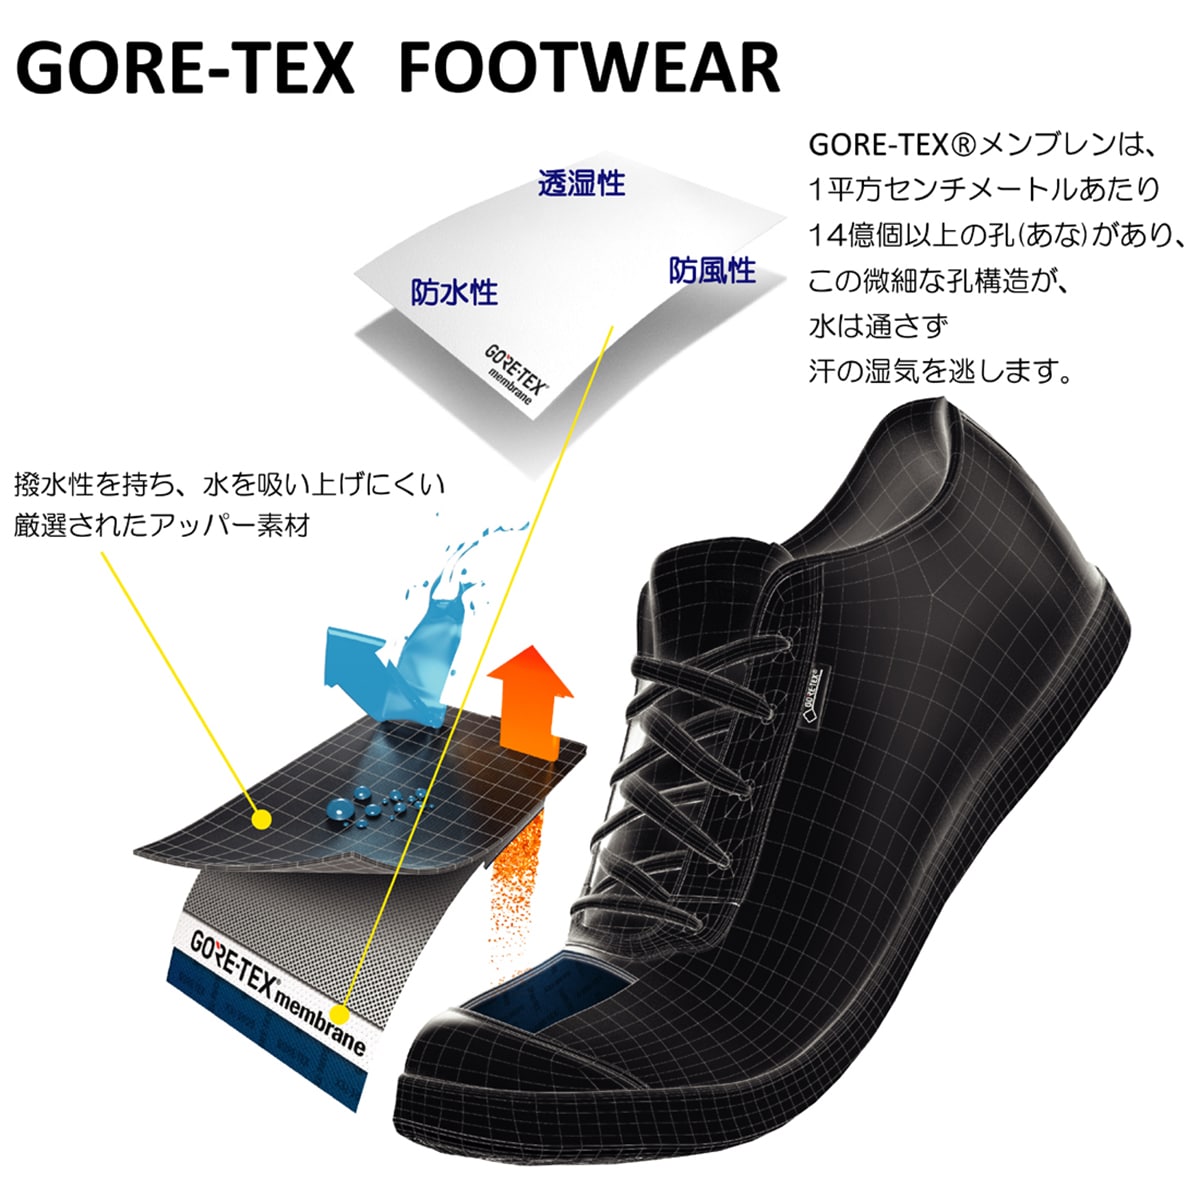 【GORE-TEX】 マドラスウォーク madras Walk ゴアテックス フットウェア 幅広ラウンドトウの甲ゴムローファー  MW5907 BLACK 25.0